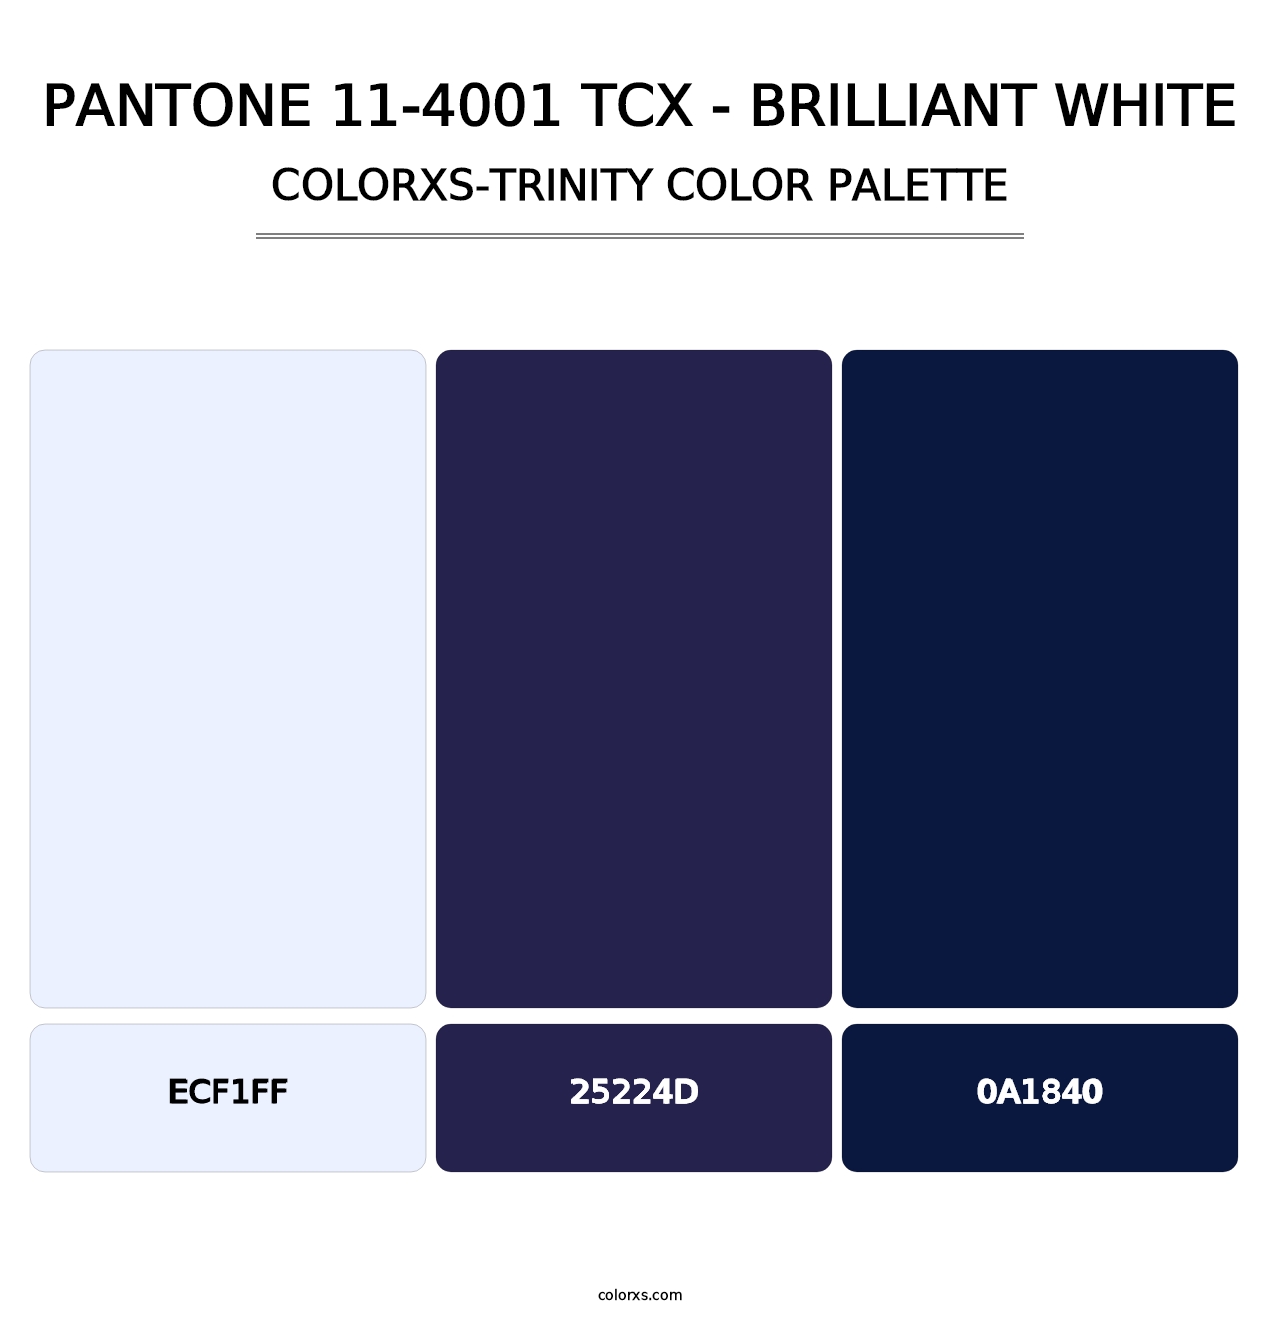 PANTONE 11-4001 TCX - Brilliant White - Colorxs Trinity Palette